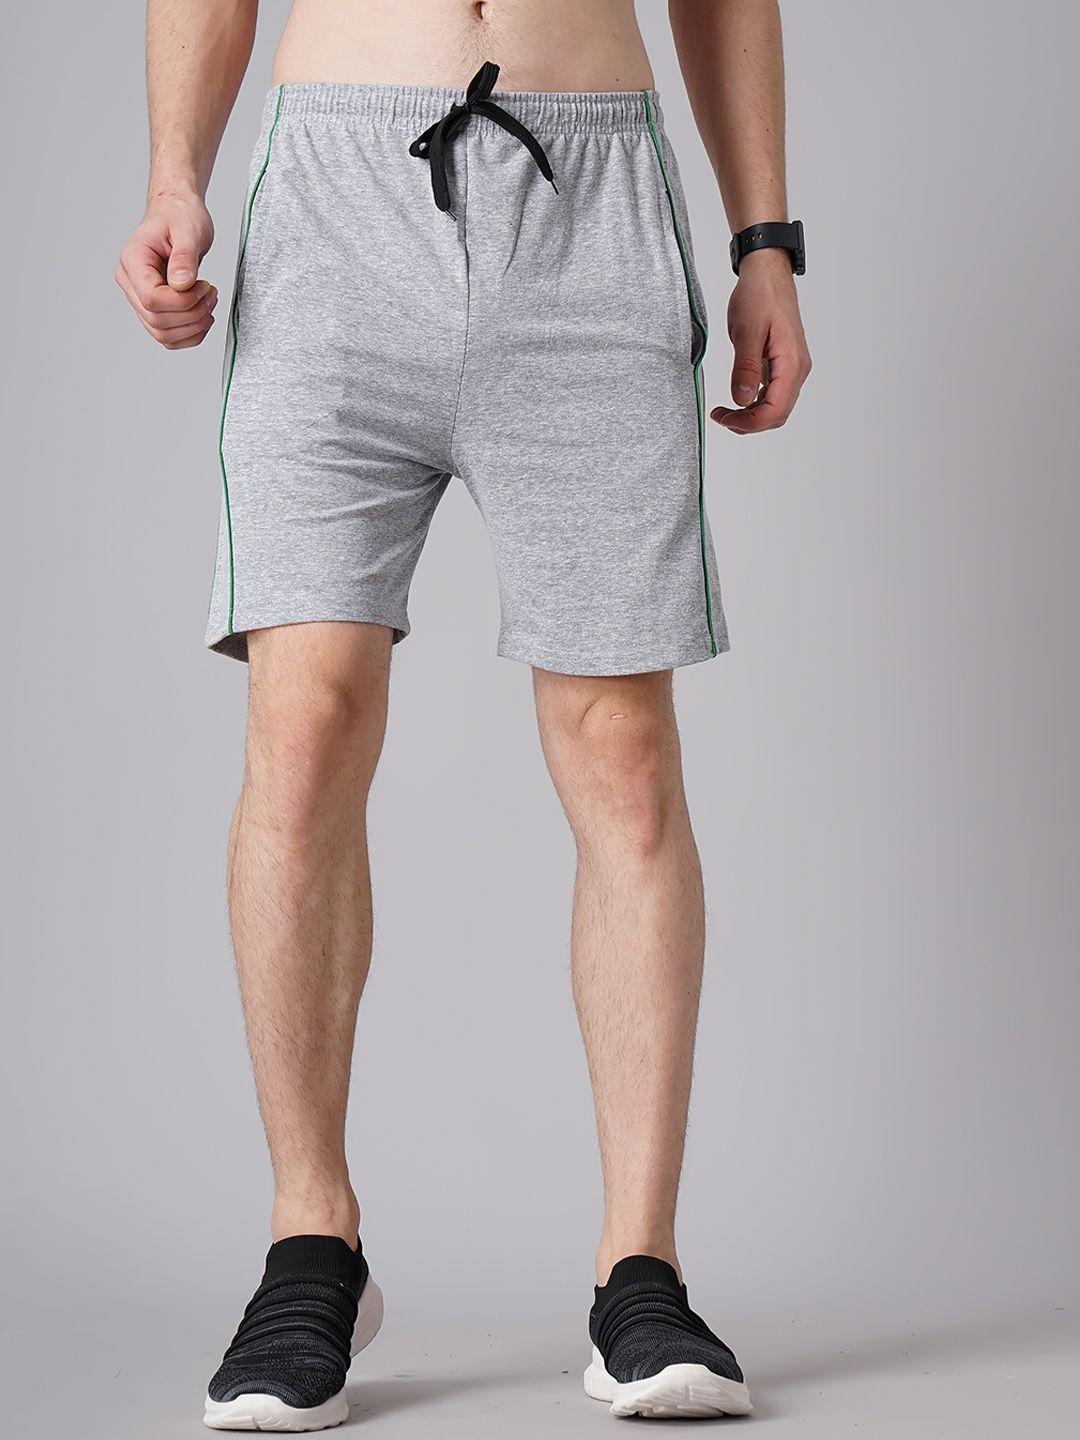 madsto-plus-size-men-striped-slim-fit-cotton-sports-shorts